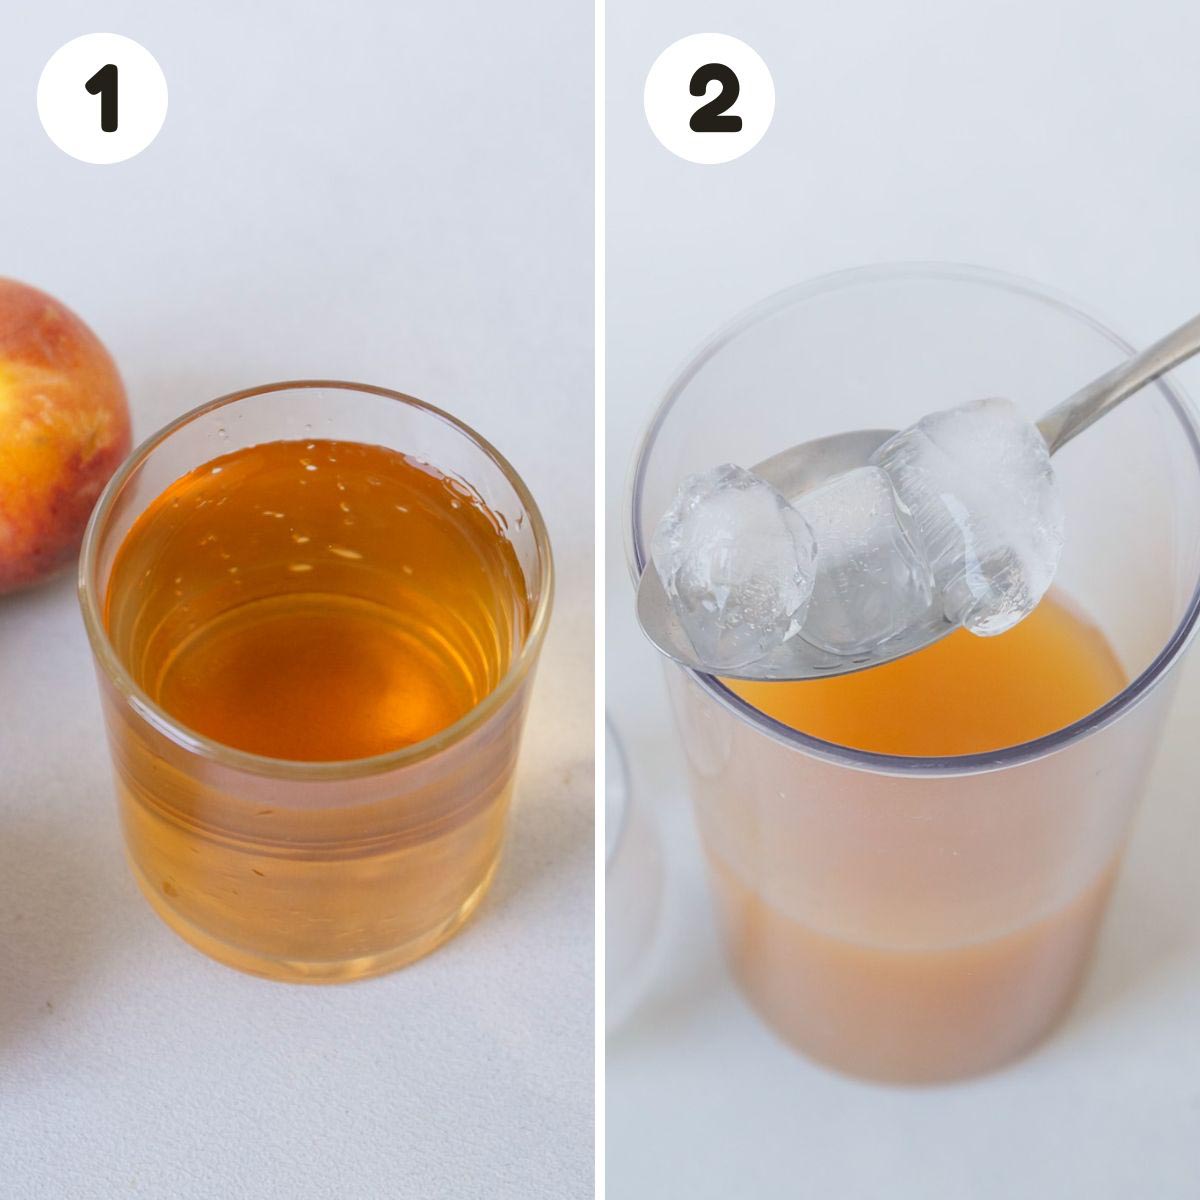 Steps to make the peach tea.